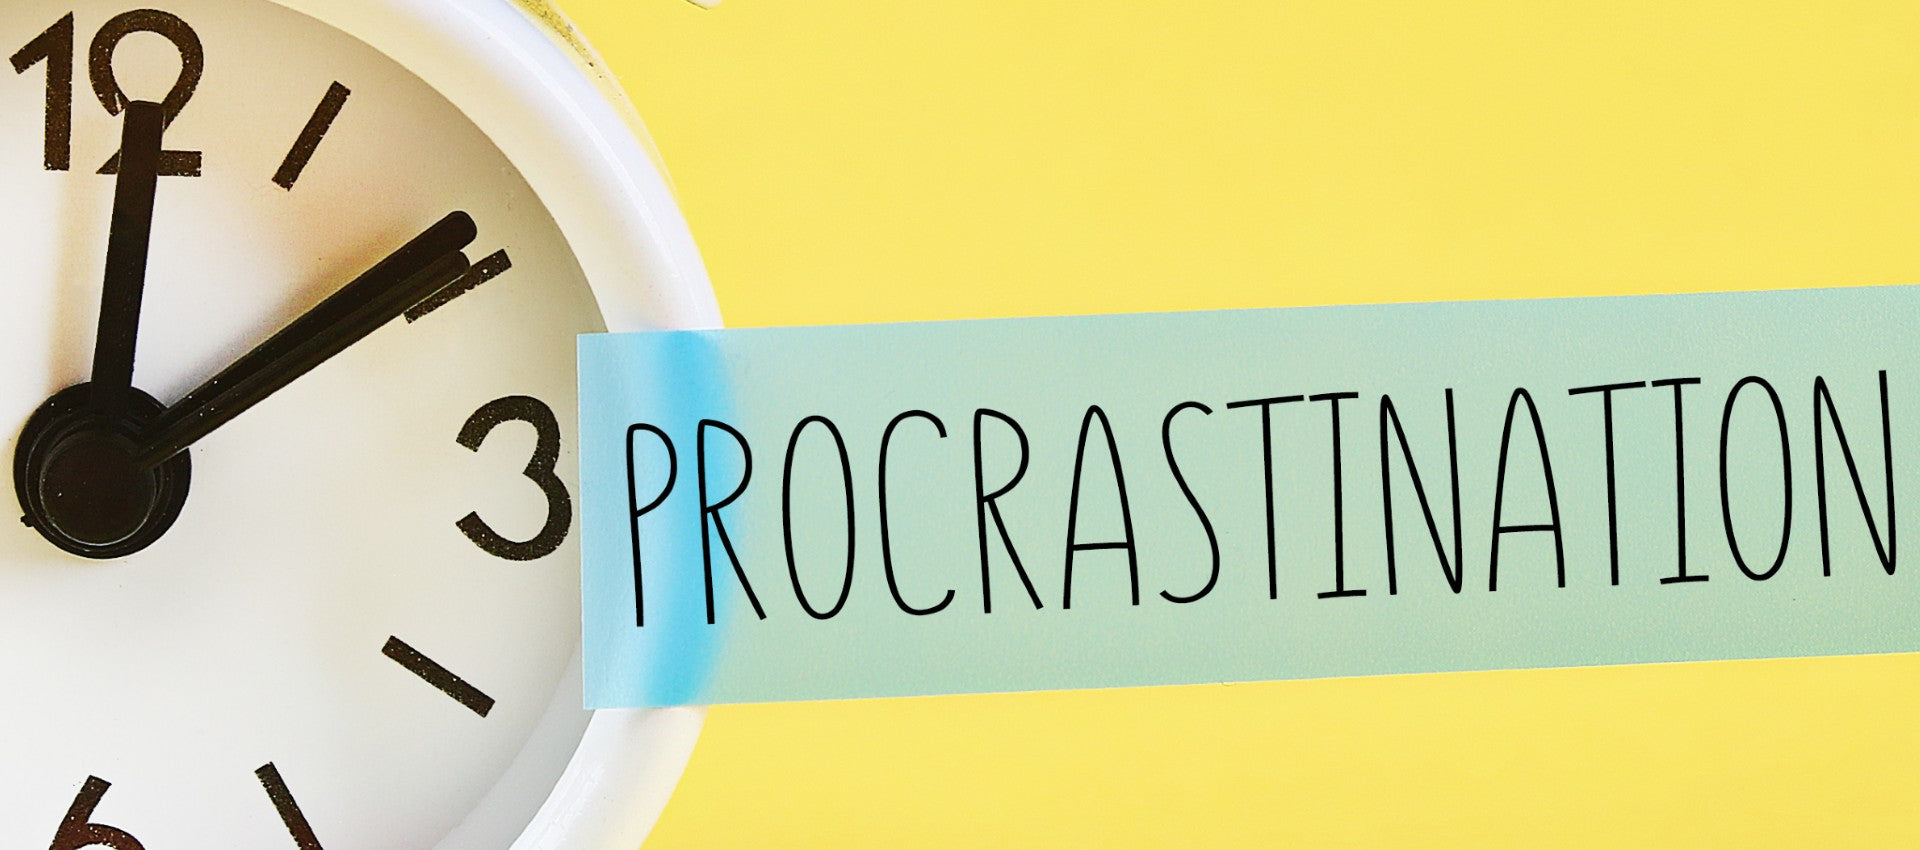 Beating procrastination